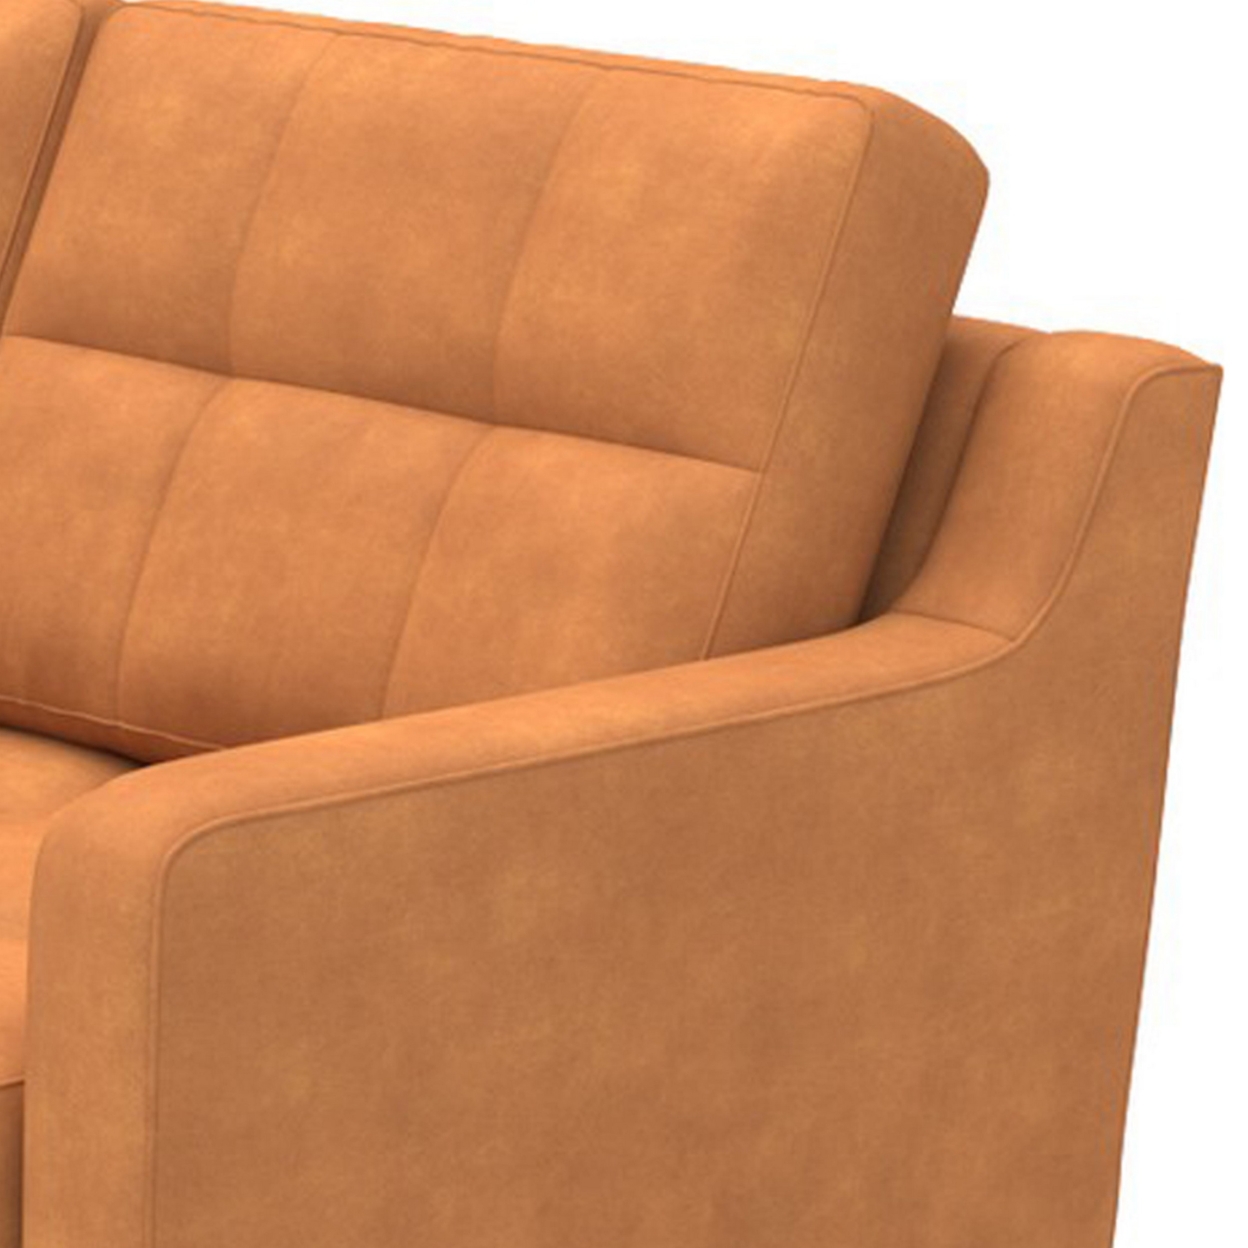 Juan 81 Inch Modular Sofa, Foam Filled Back, Square Arms, Brown Leather- Saltoro Sherpi